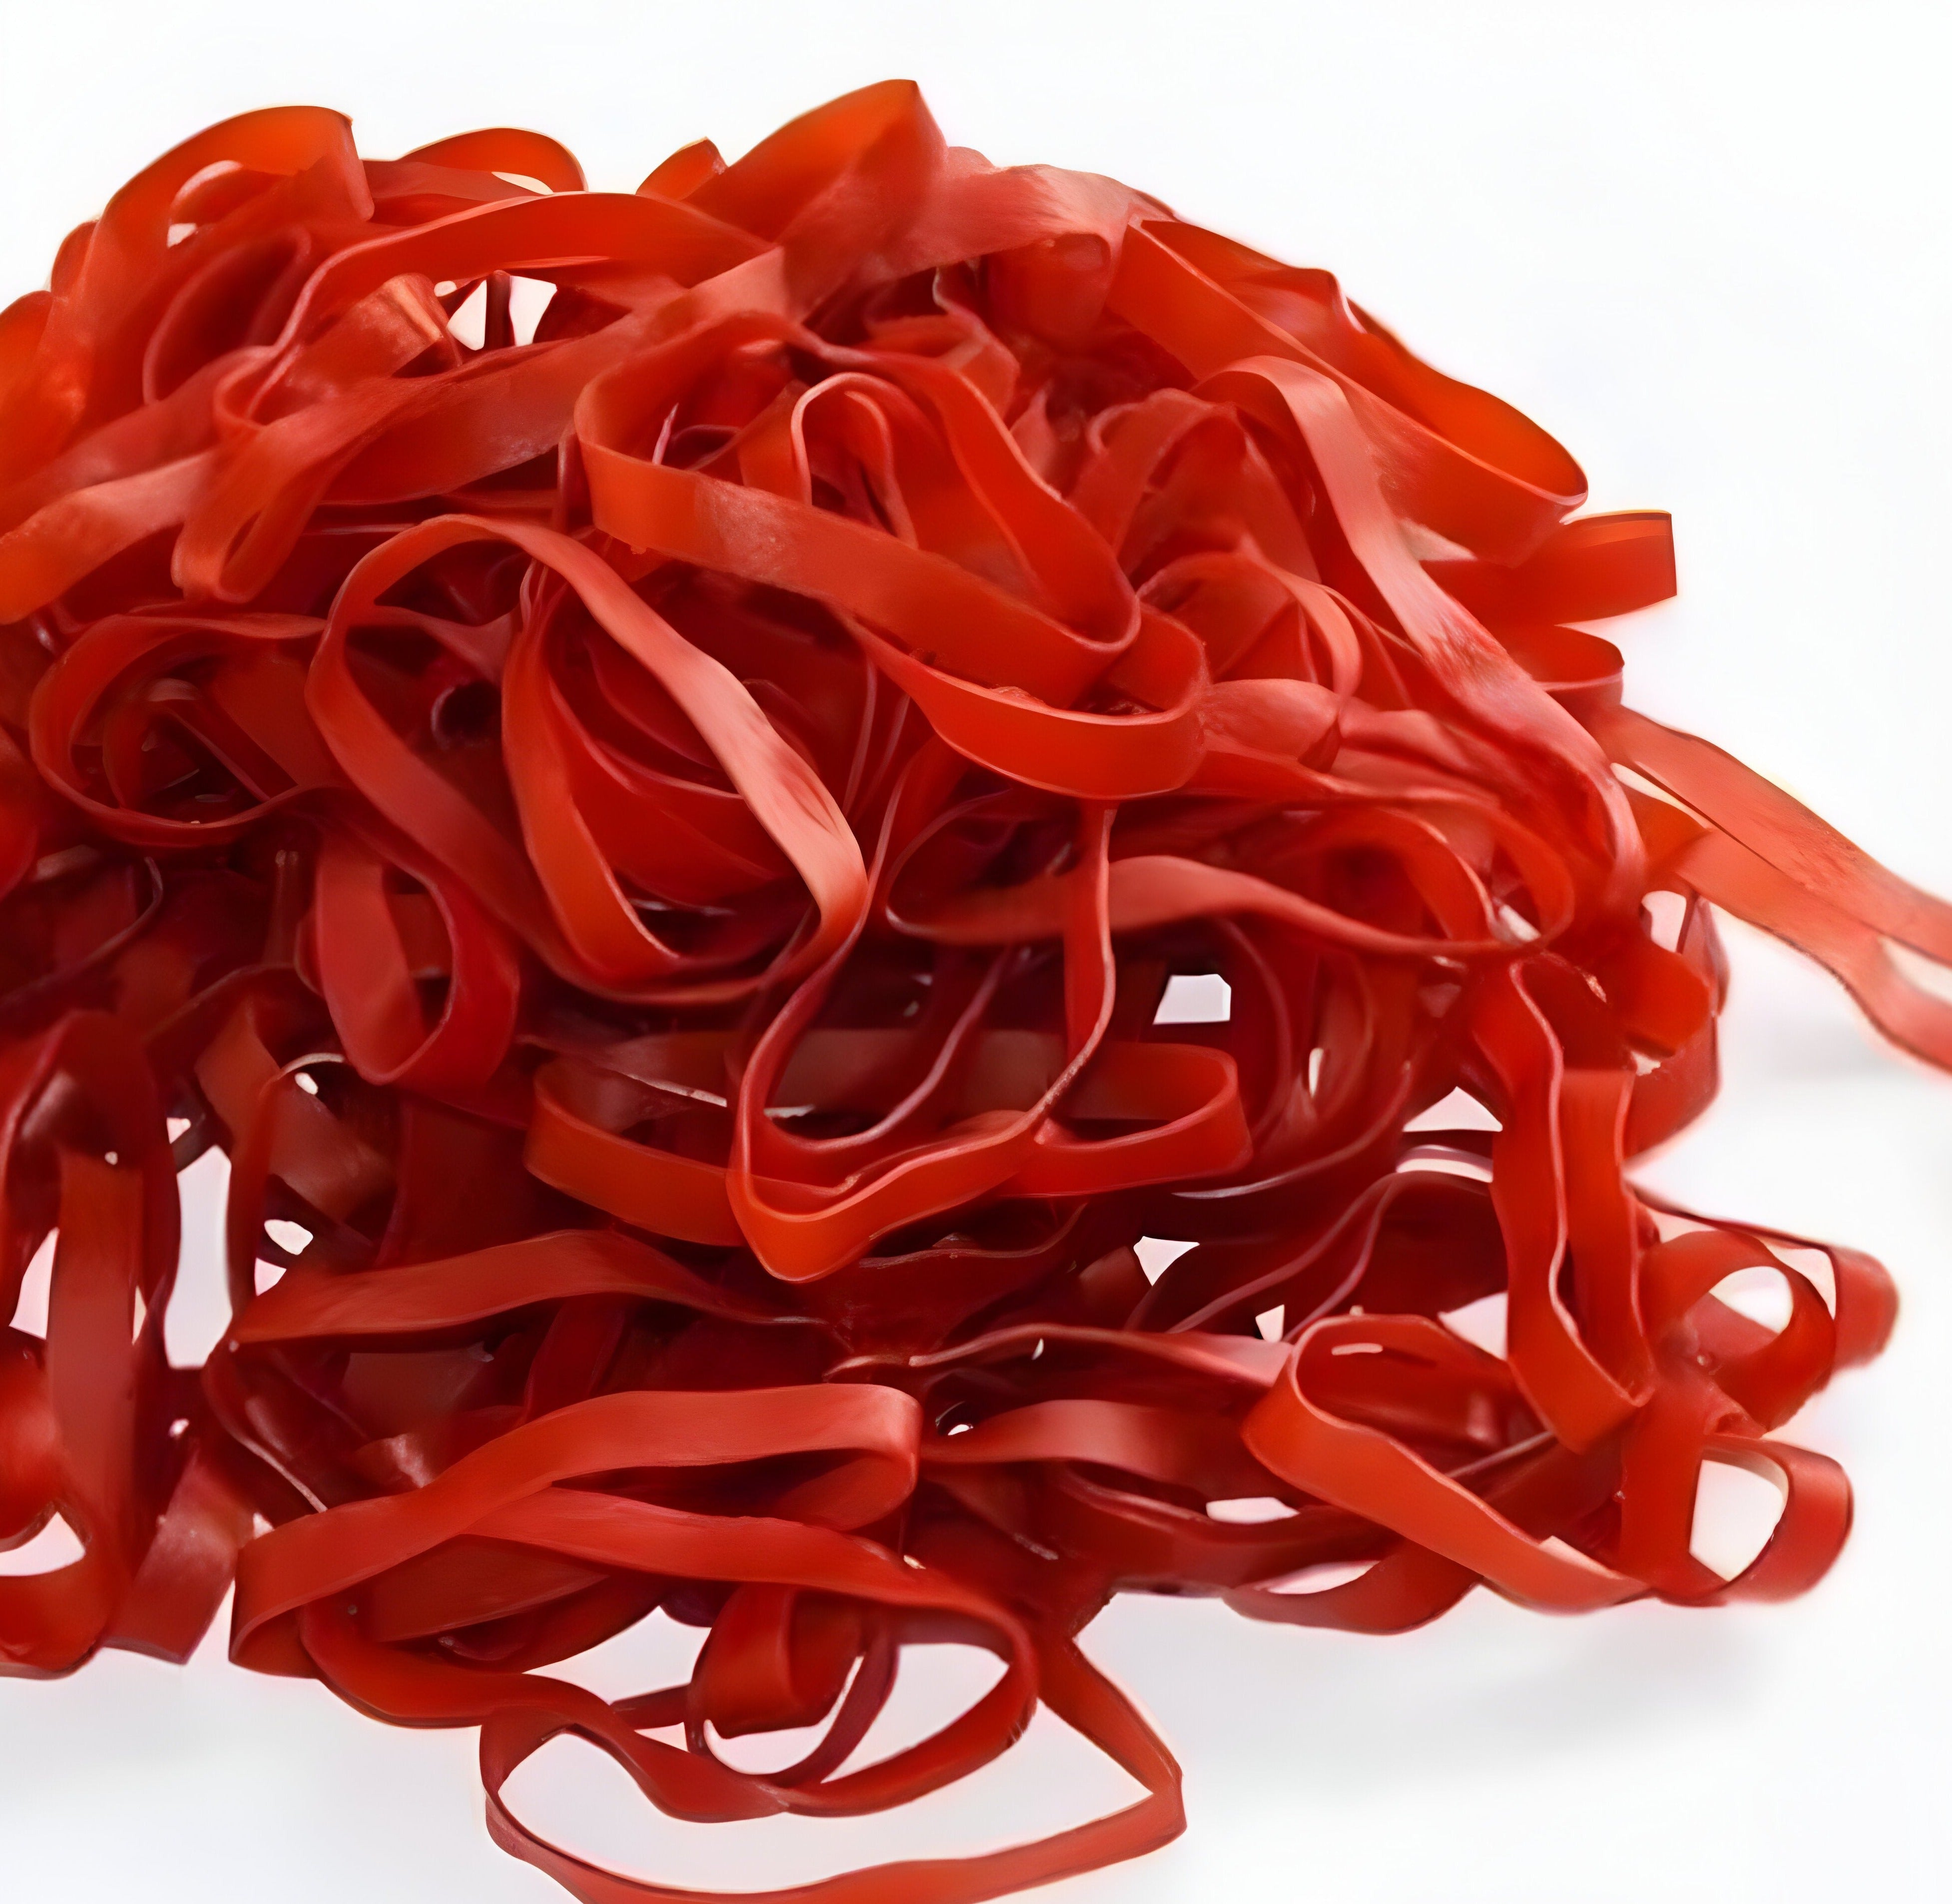 KL Rubber - #12 Red Natural Biodegradable Elastic Rubber Bands, 1lb/Pk - 465049 -